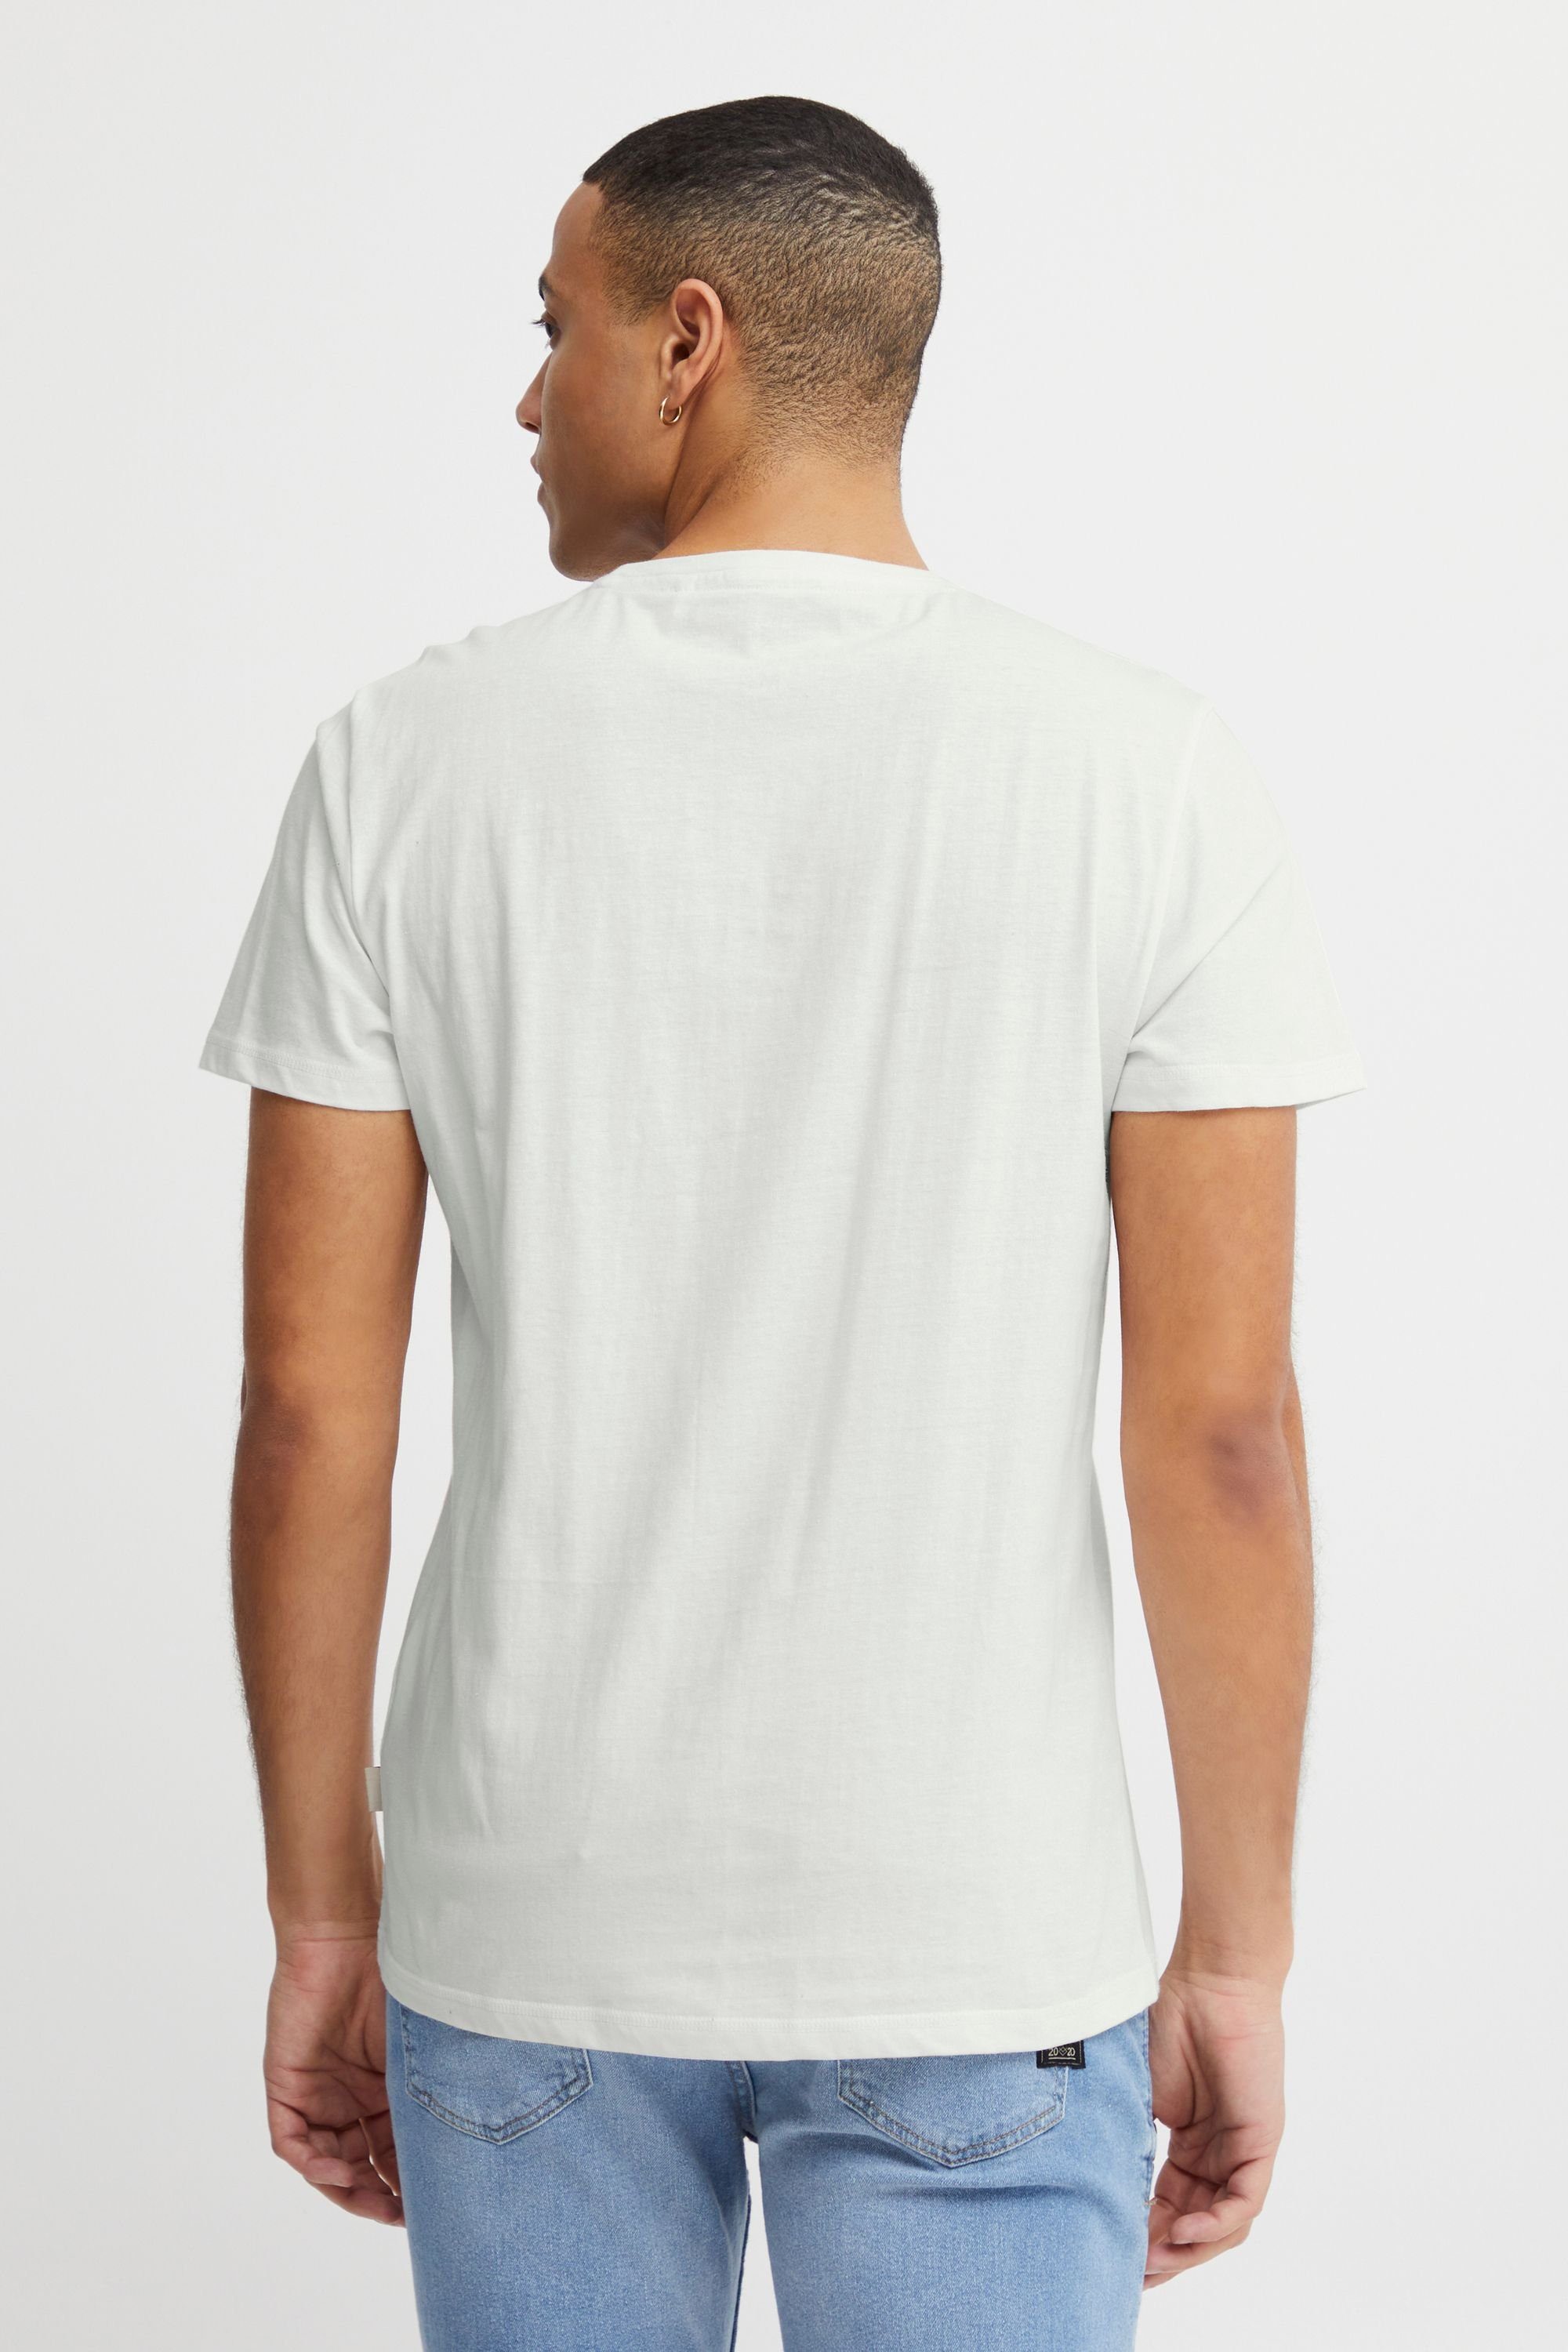 11 Project Snow O-Neck 20715957ME T-Shirt Project 11 T-Shirt PRSit White